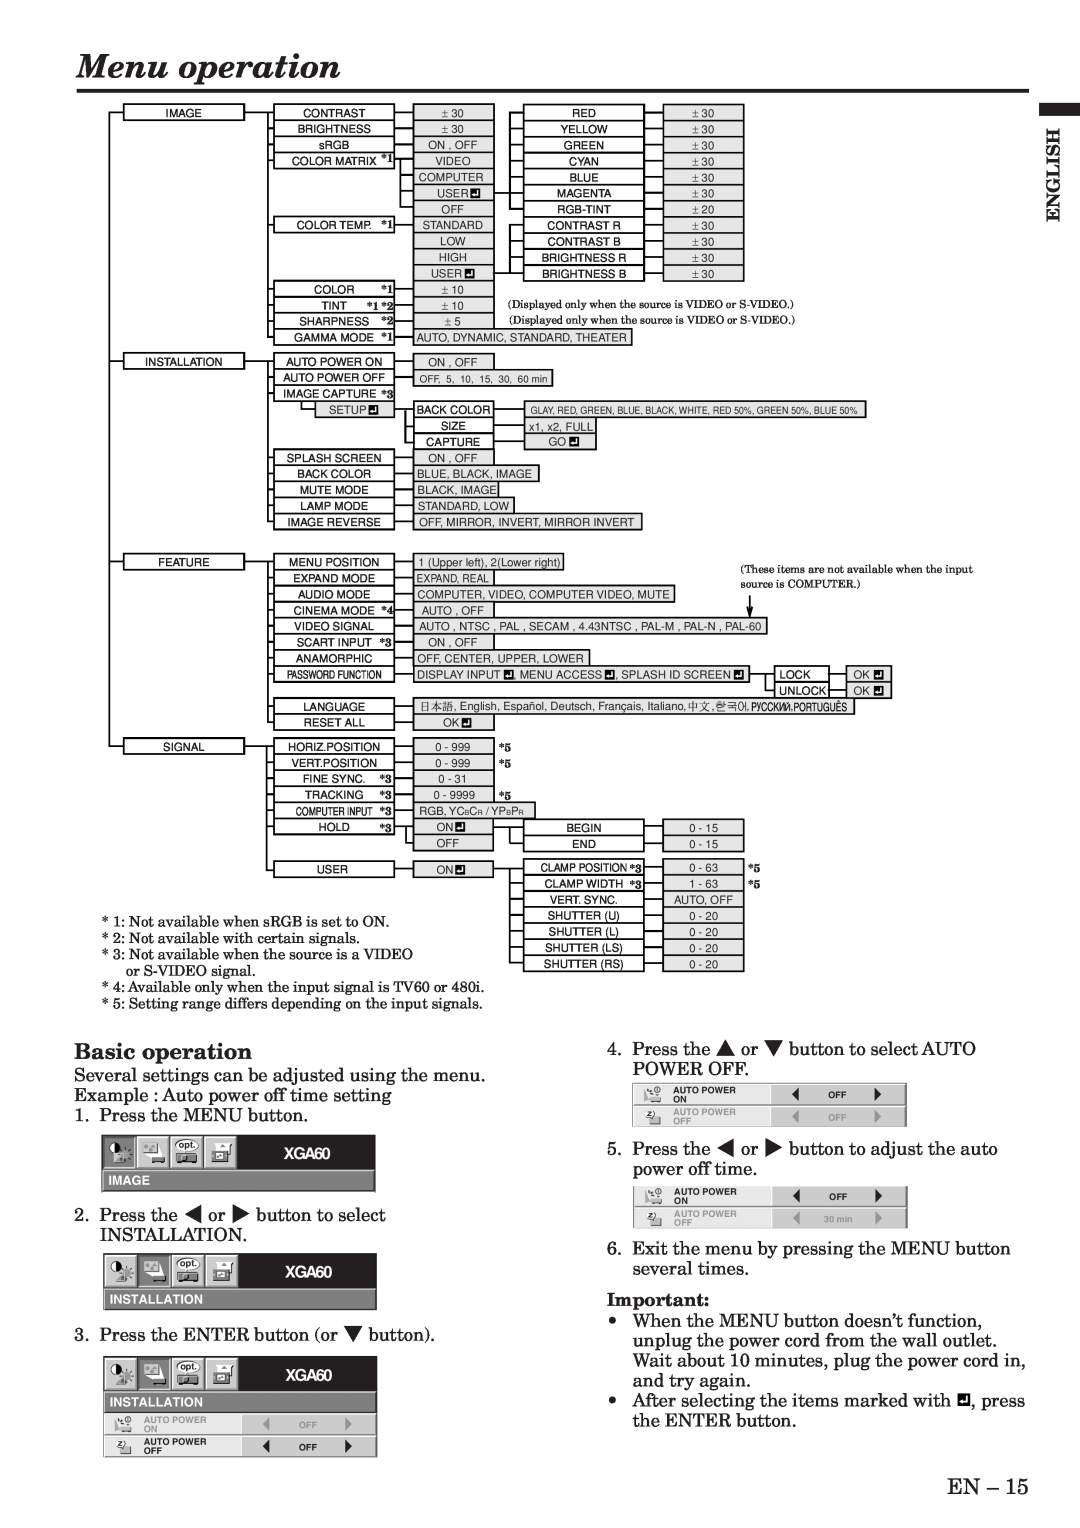 Mitsubishi Electronics XL6U user manual Menu operation, Basic operation, XGA60, Image, Installation 